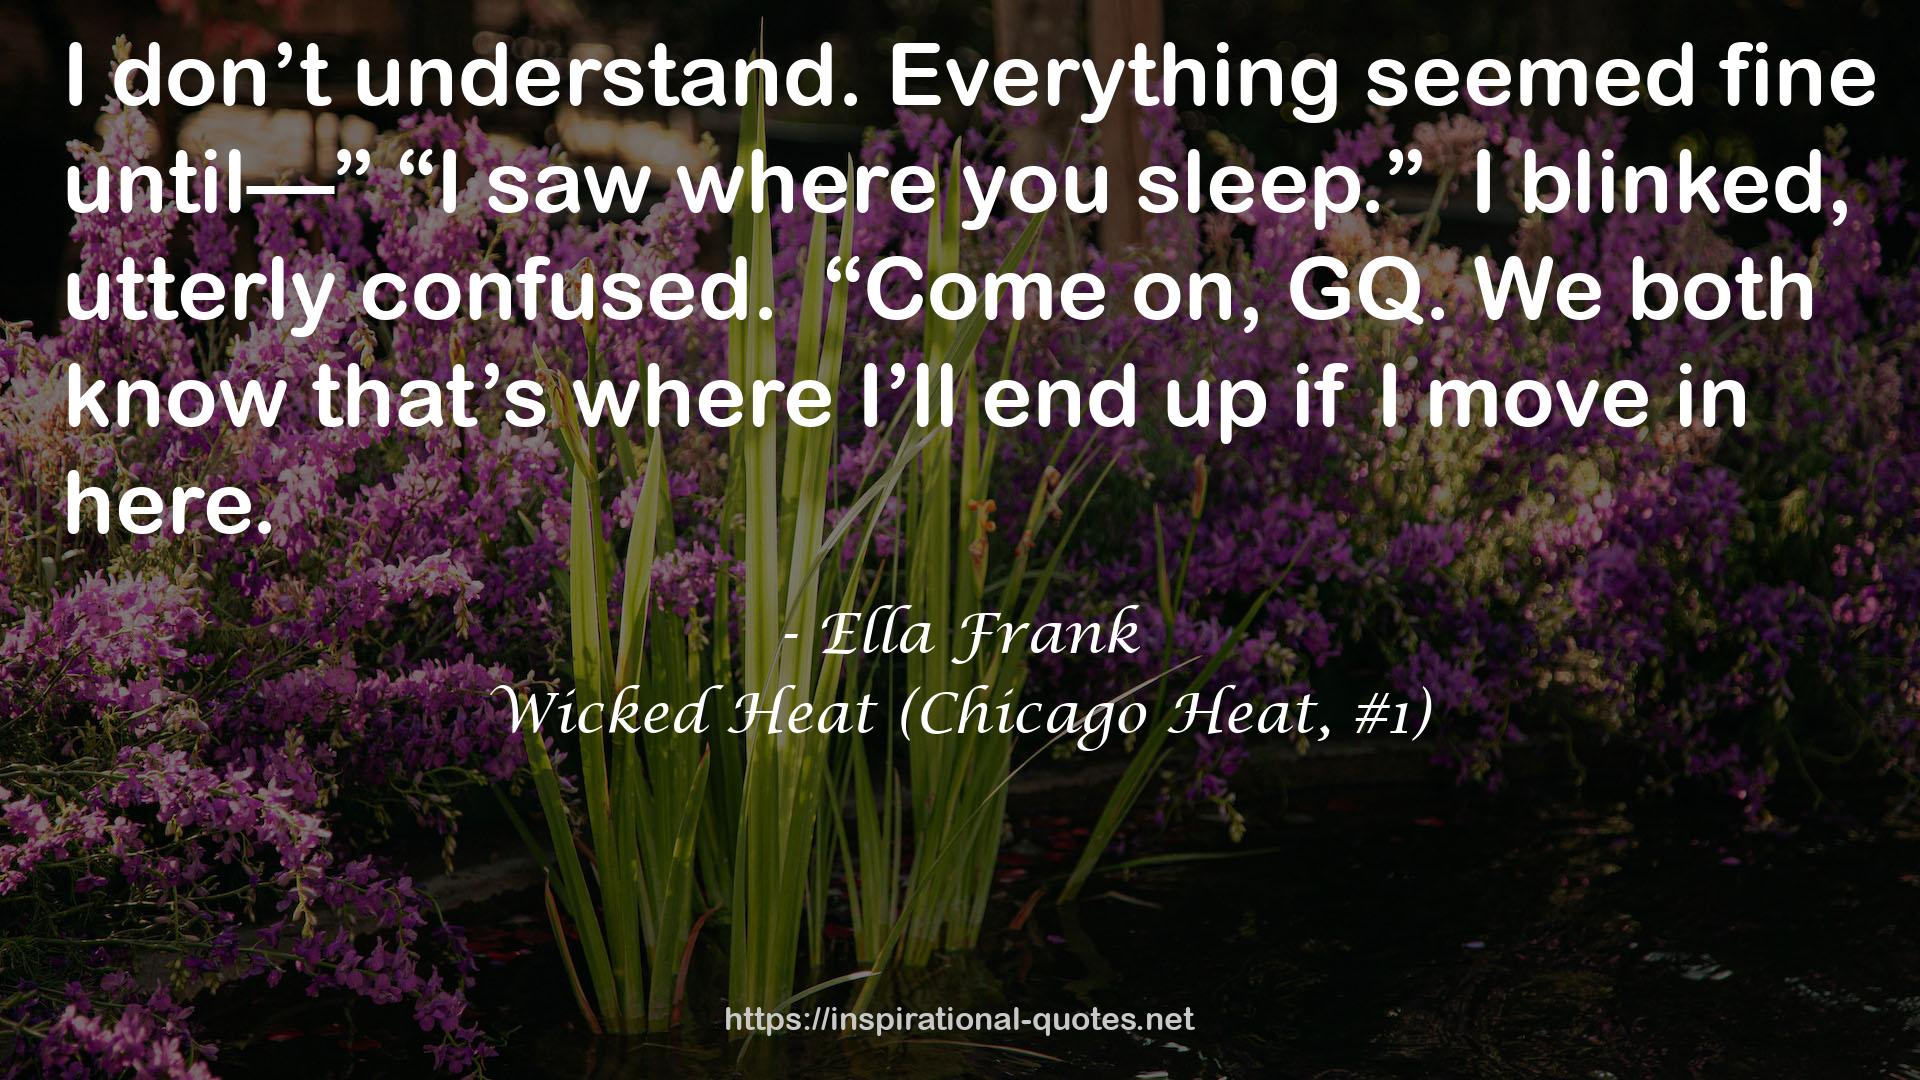 Wicked Heat (Chicago Heat, #1) QUOTES